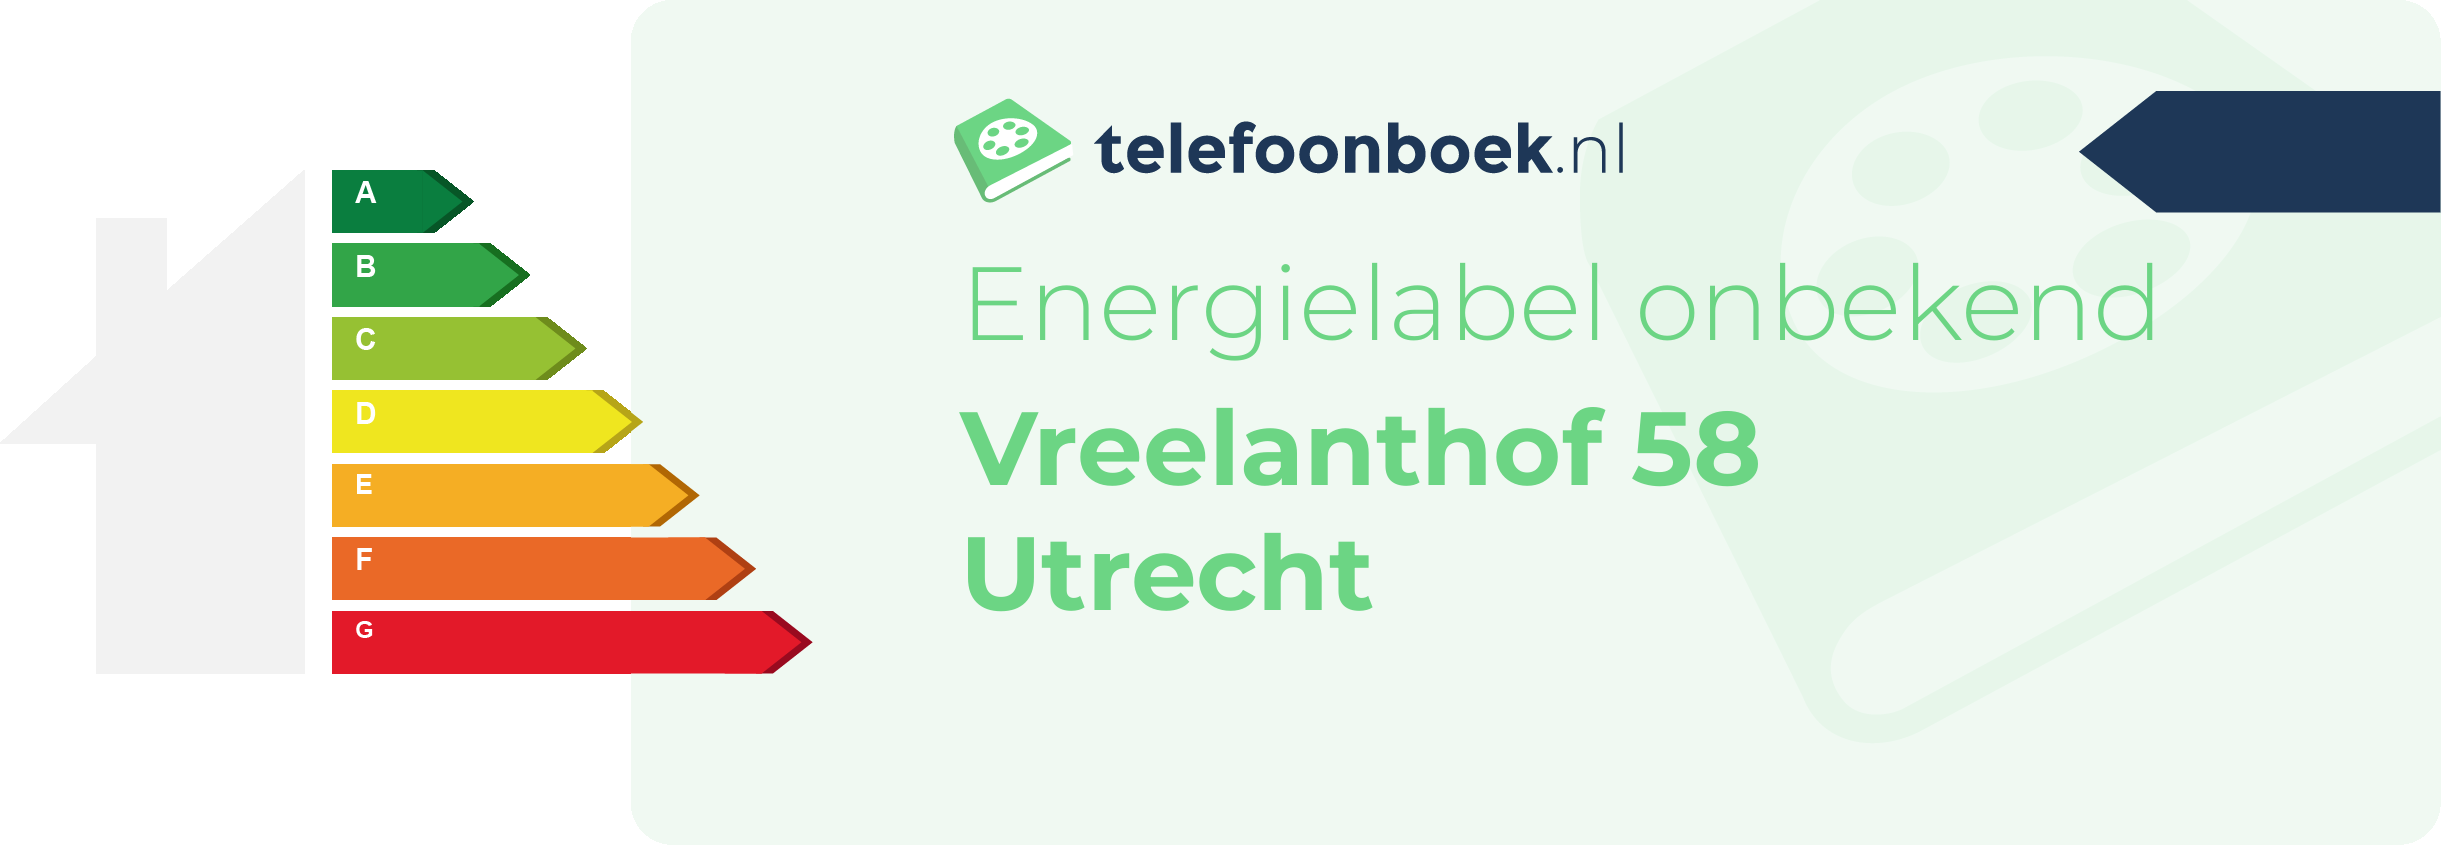 Energielabel Vreelanthof 58 Utrecht